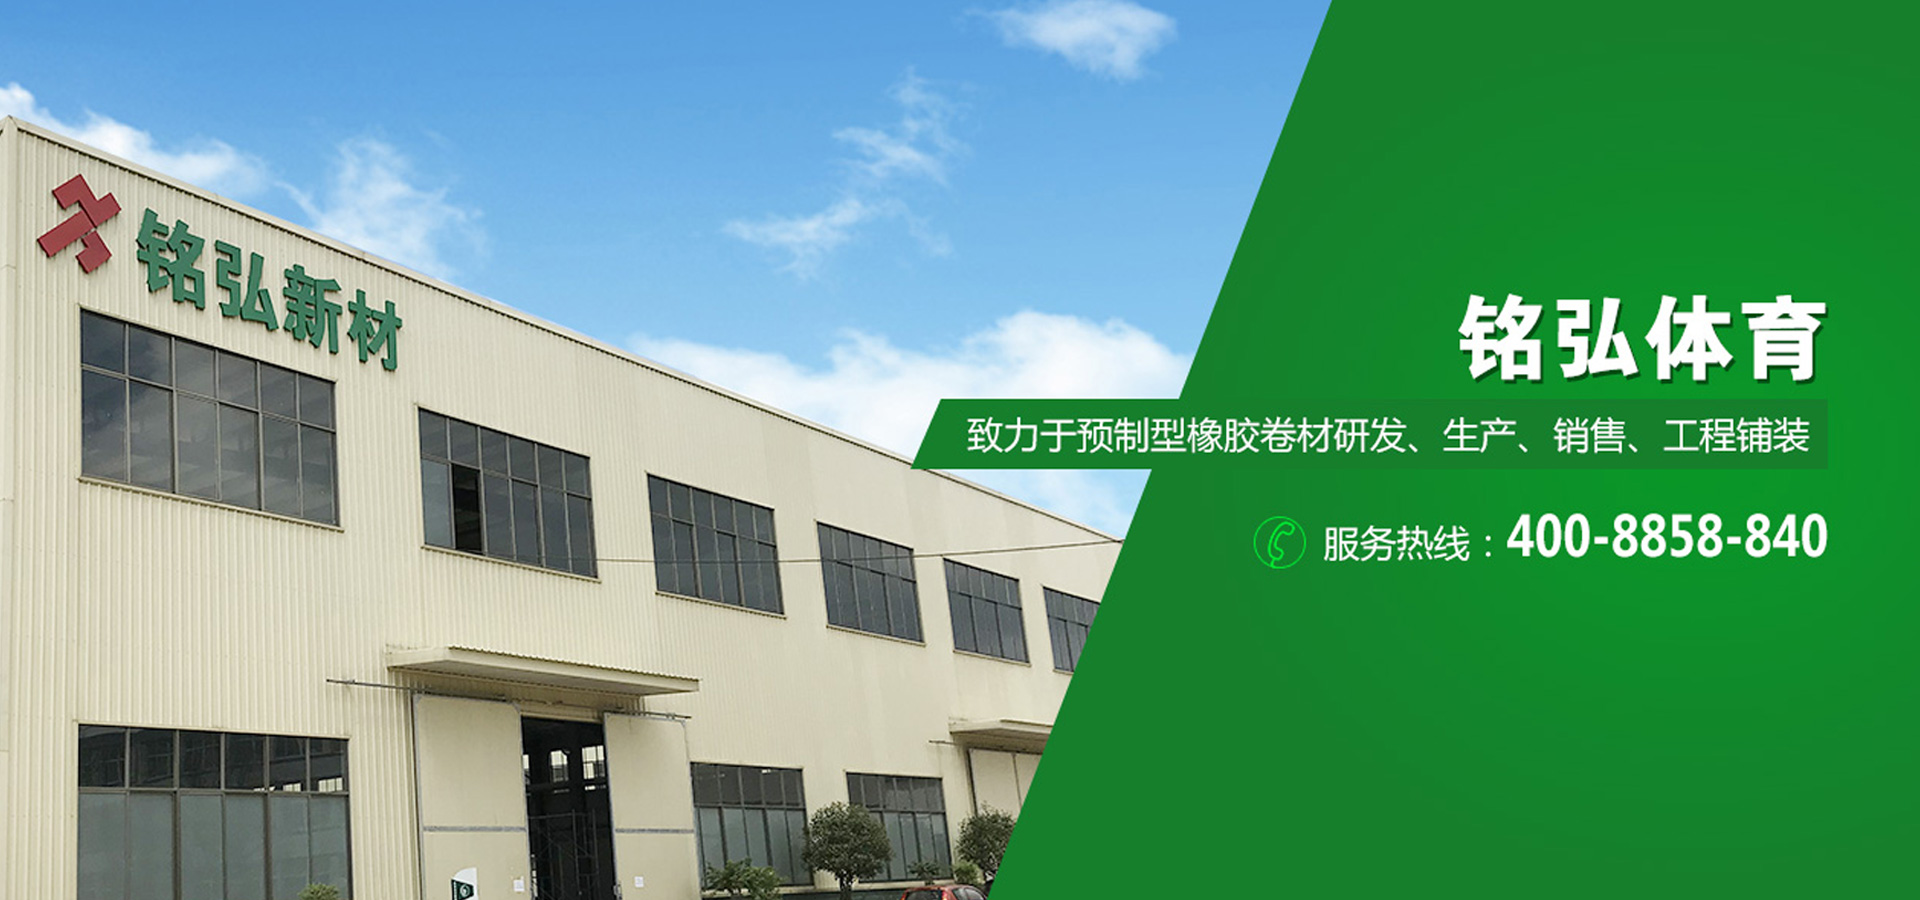 aoa体育(中国)股份有限公司关于处置一批人造草生产设备的询价函